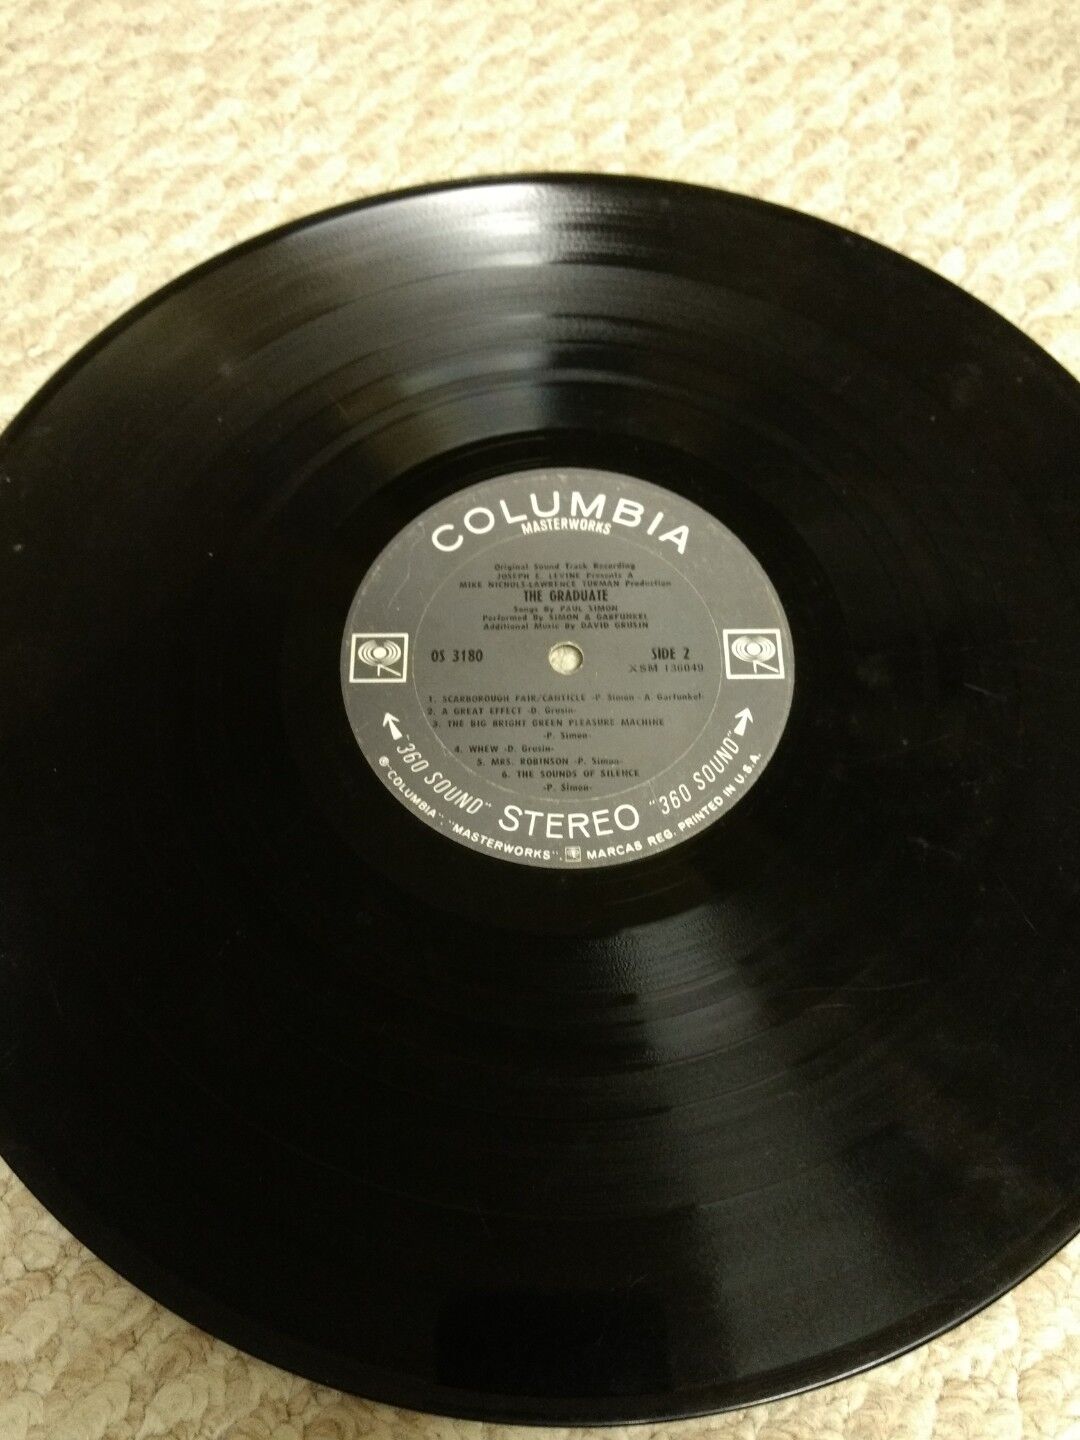 Simon and Garfunkel - The Graduate (1968) Vinyl *disc only*